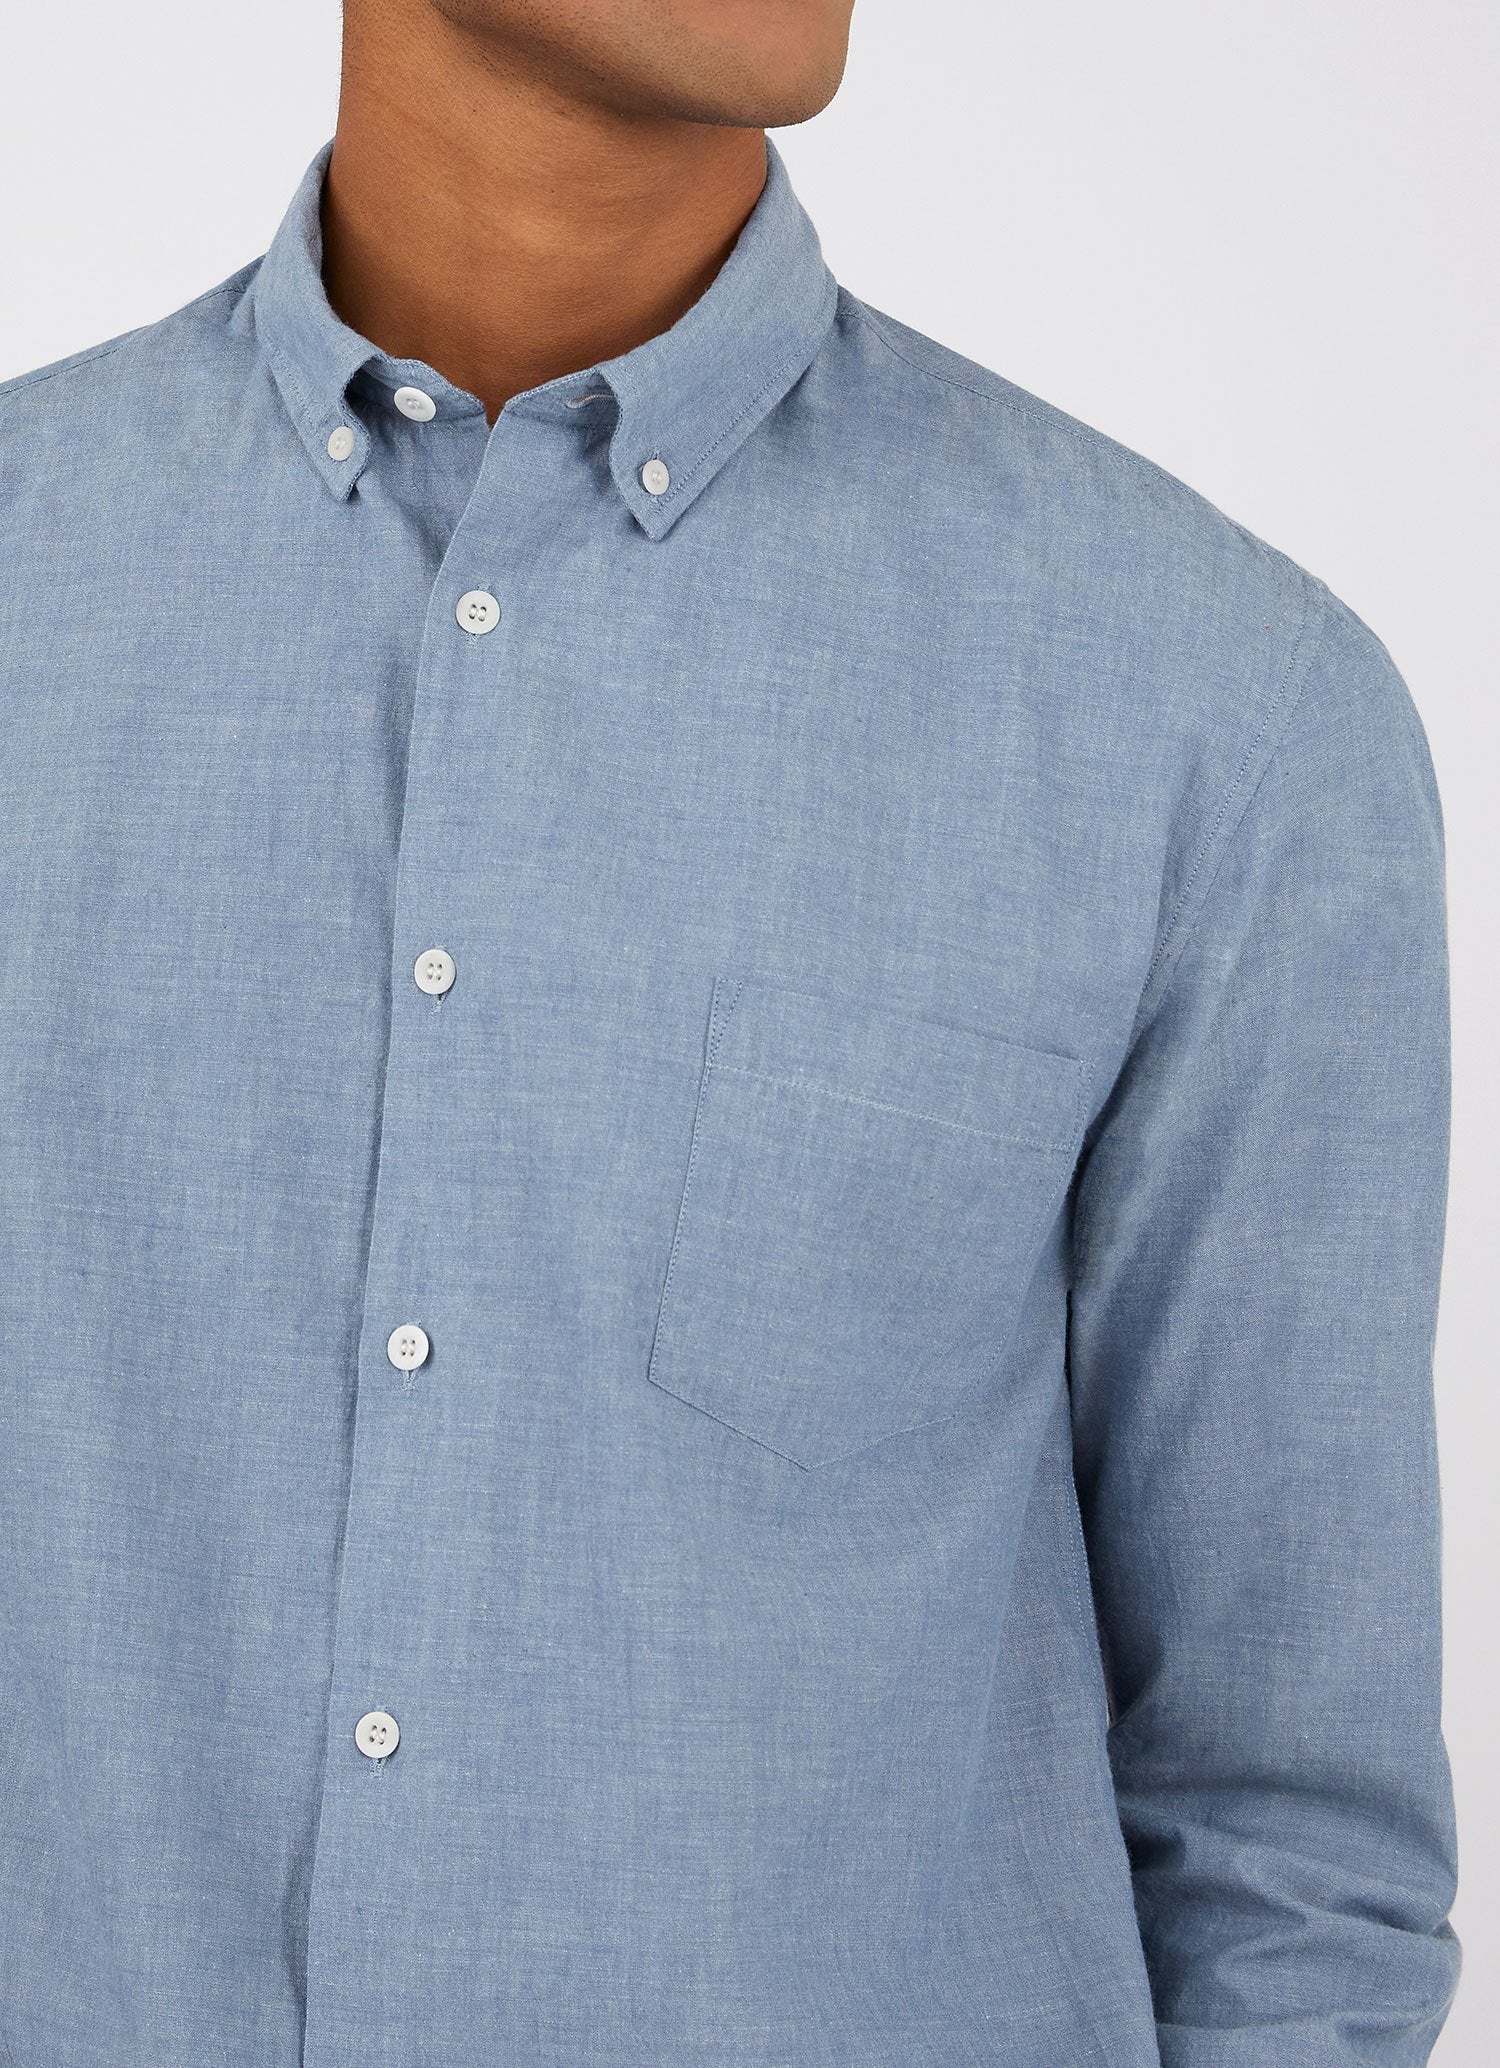 Men's Button Down Japanese Selvedge Shirt in Blue Selvedge Chambray